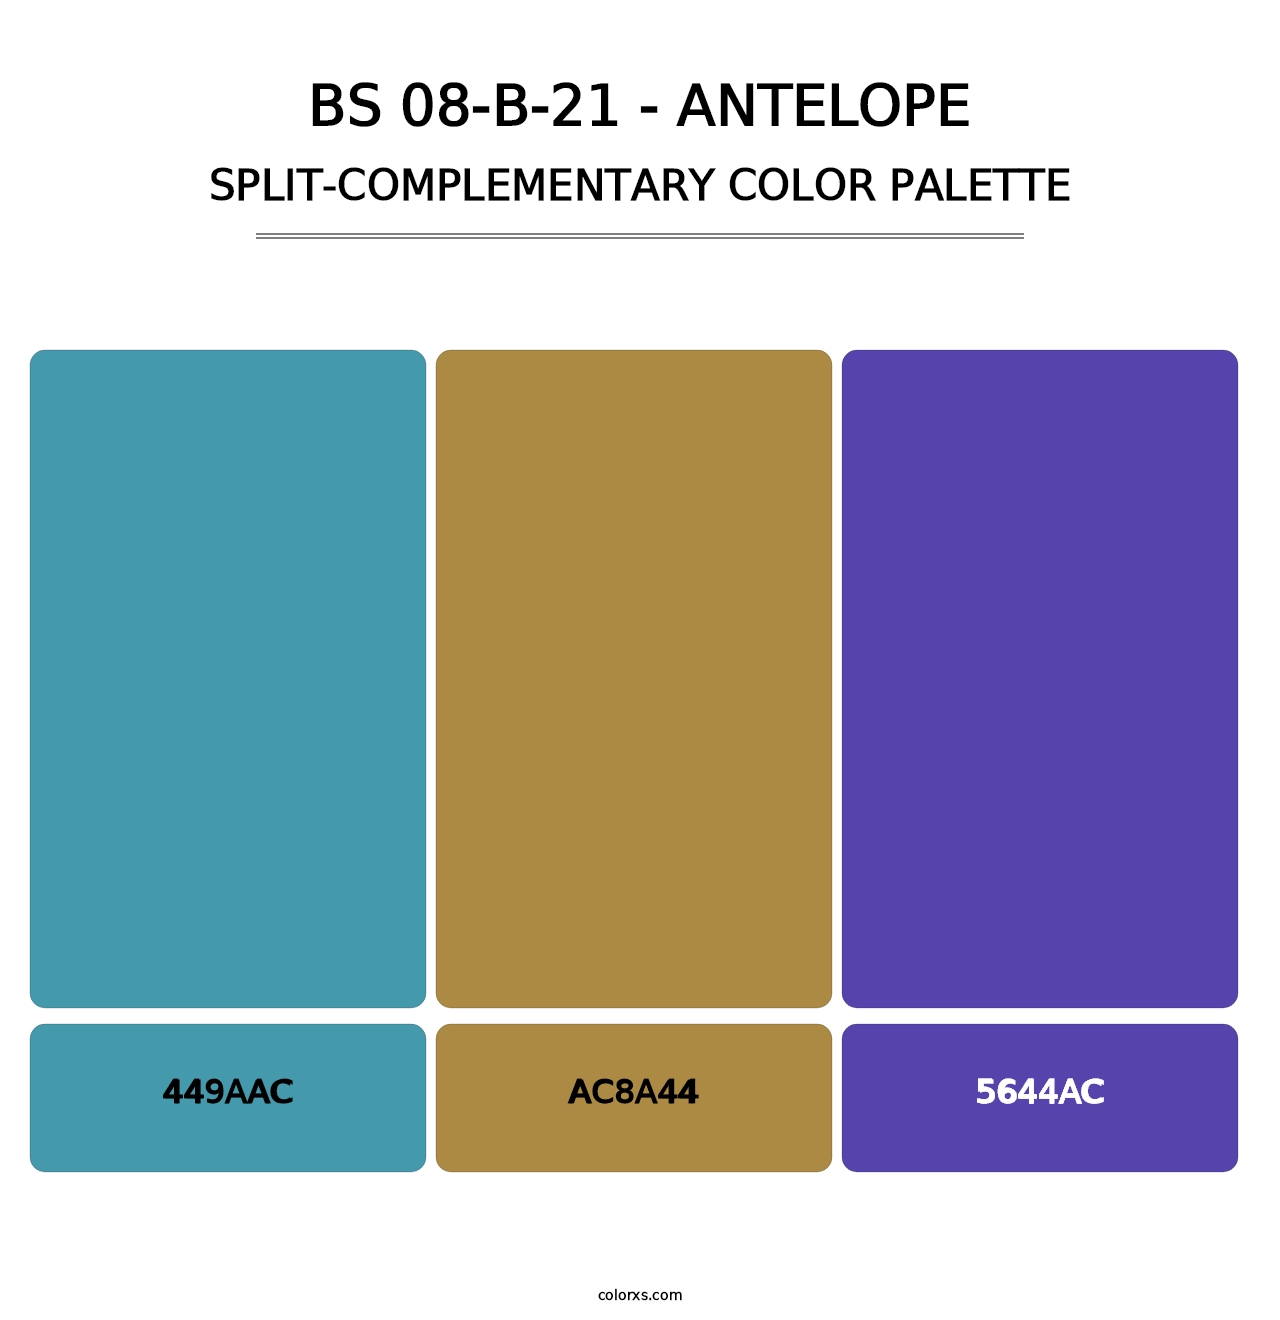 BS 08-B-21 - Antelope - Split-Complementary Color Palette